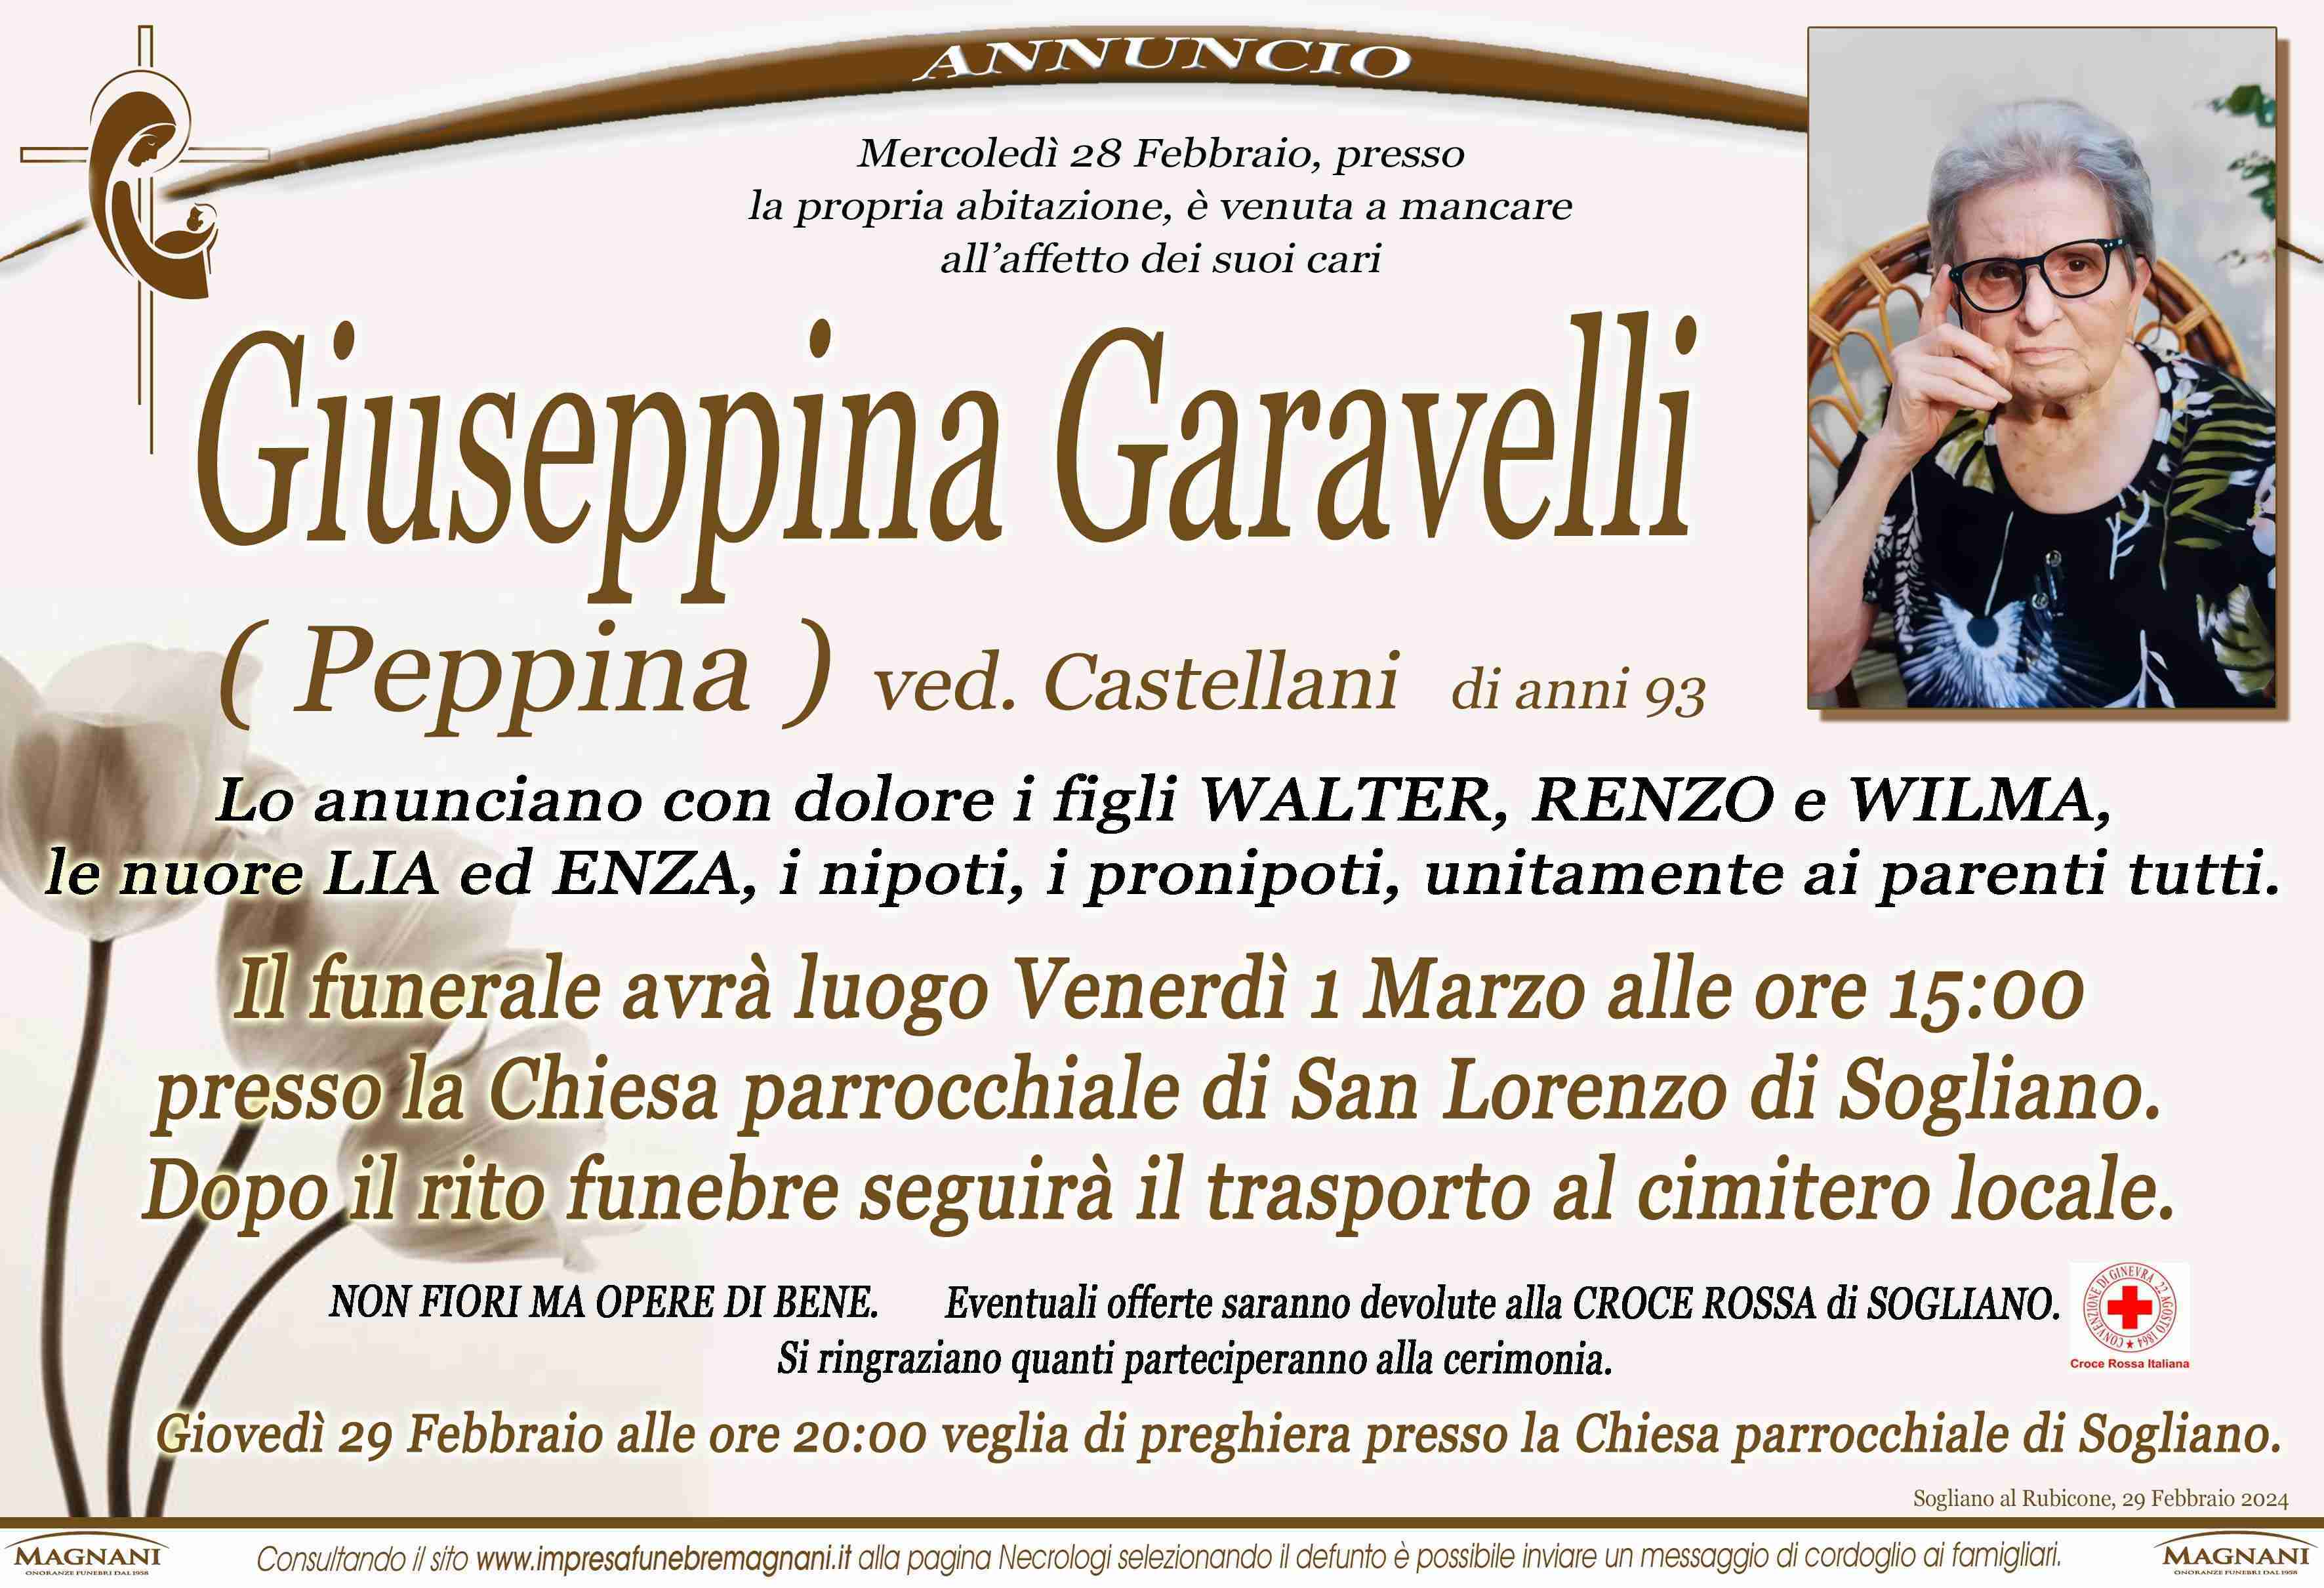 Giuseppina Garavelli (Peppina)